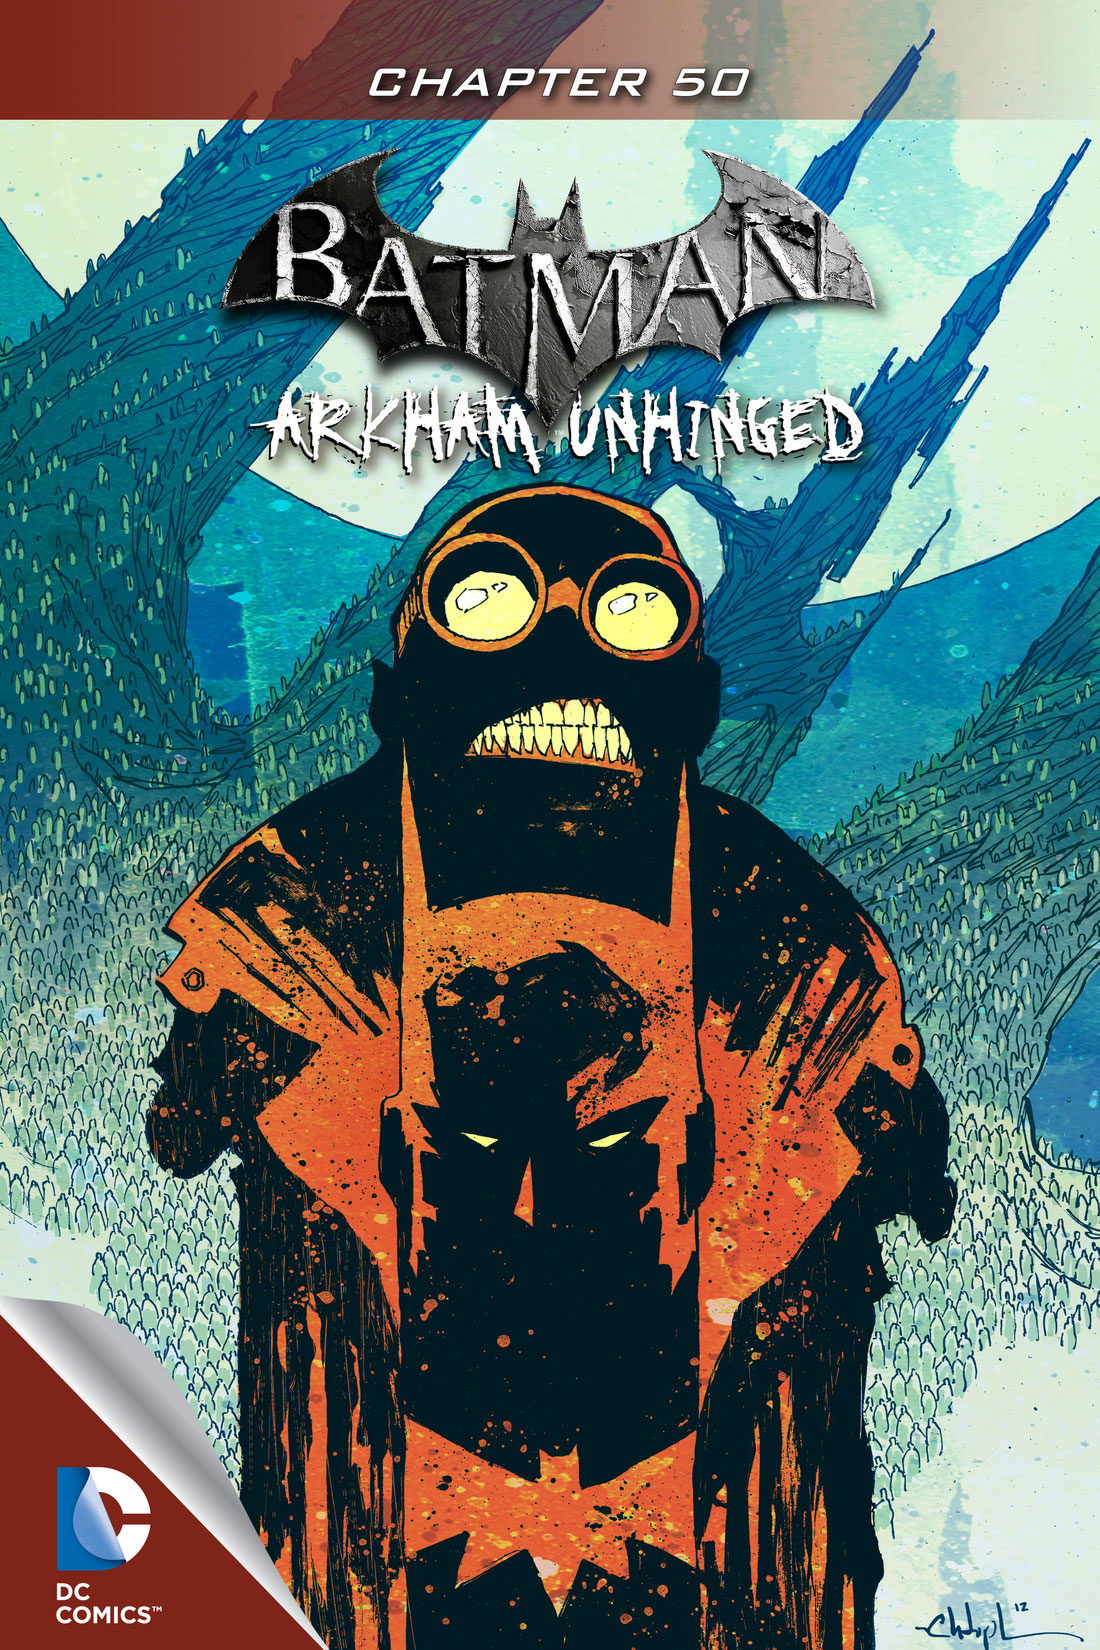 Batman: Arkham Unhinged #50 preview images